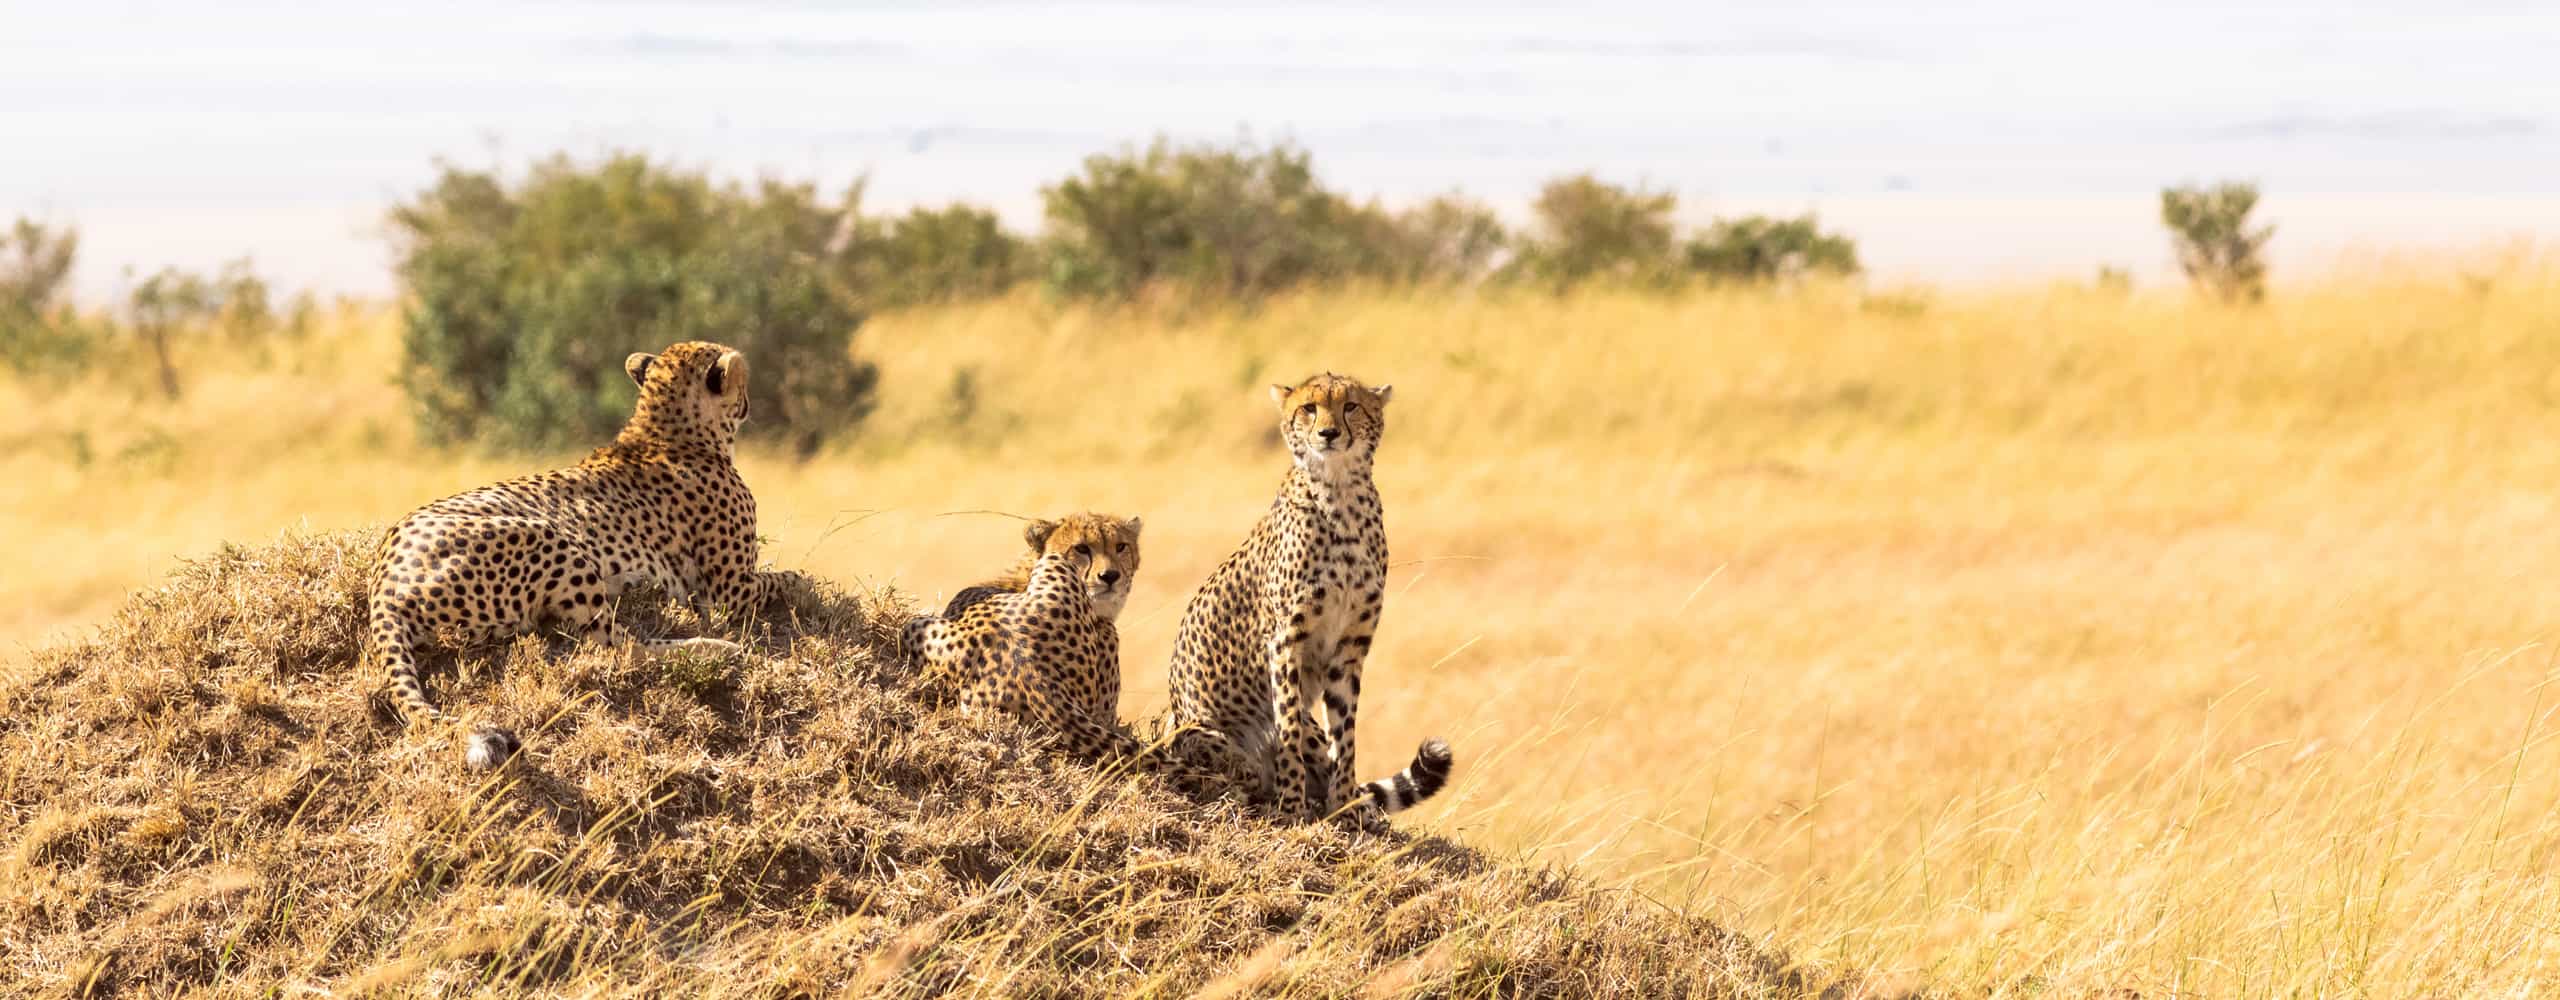 Cheetahs In The Masai Mara, Kenya